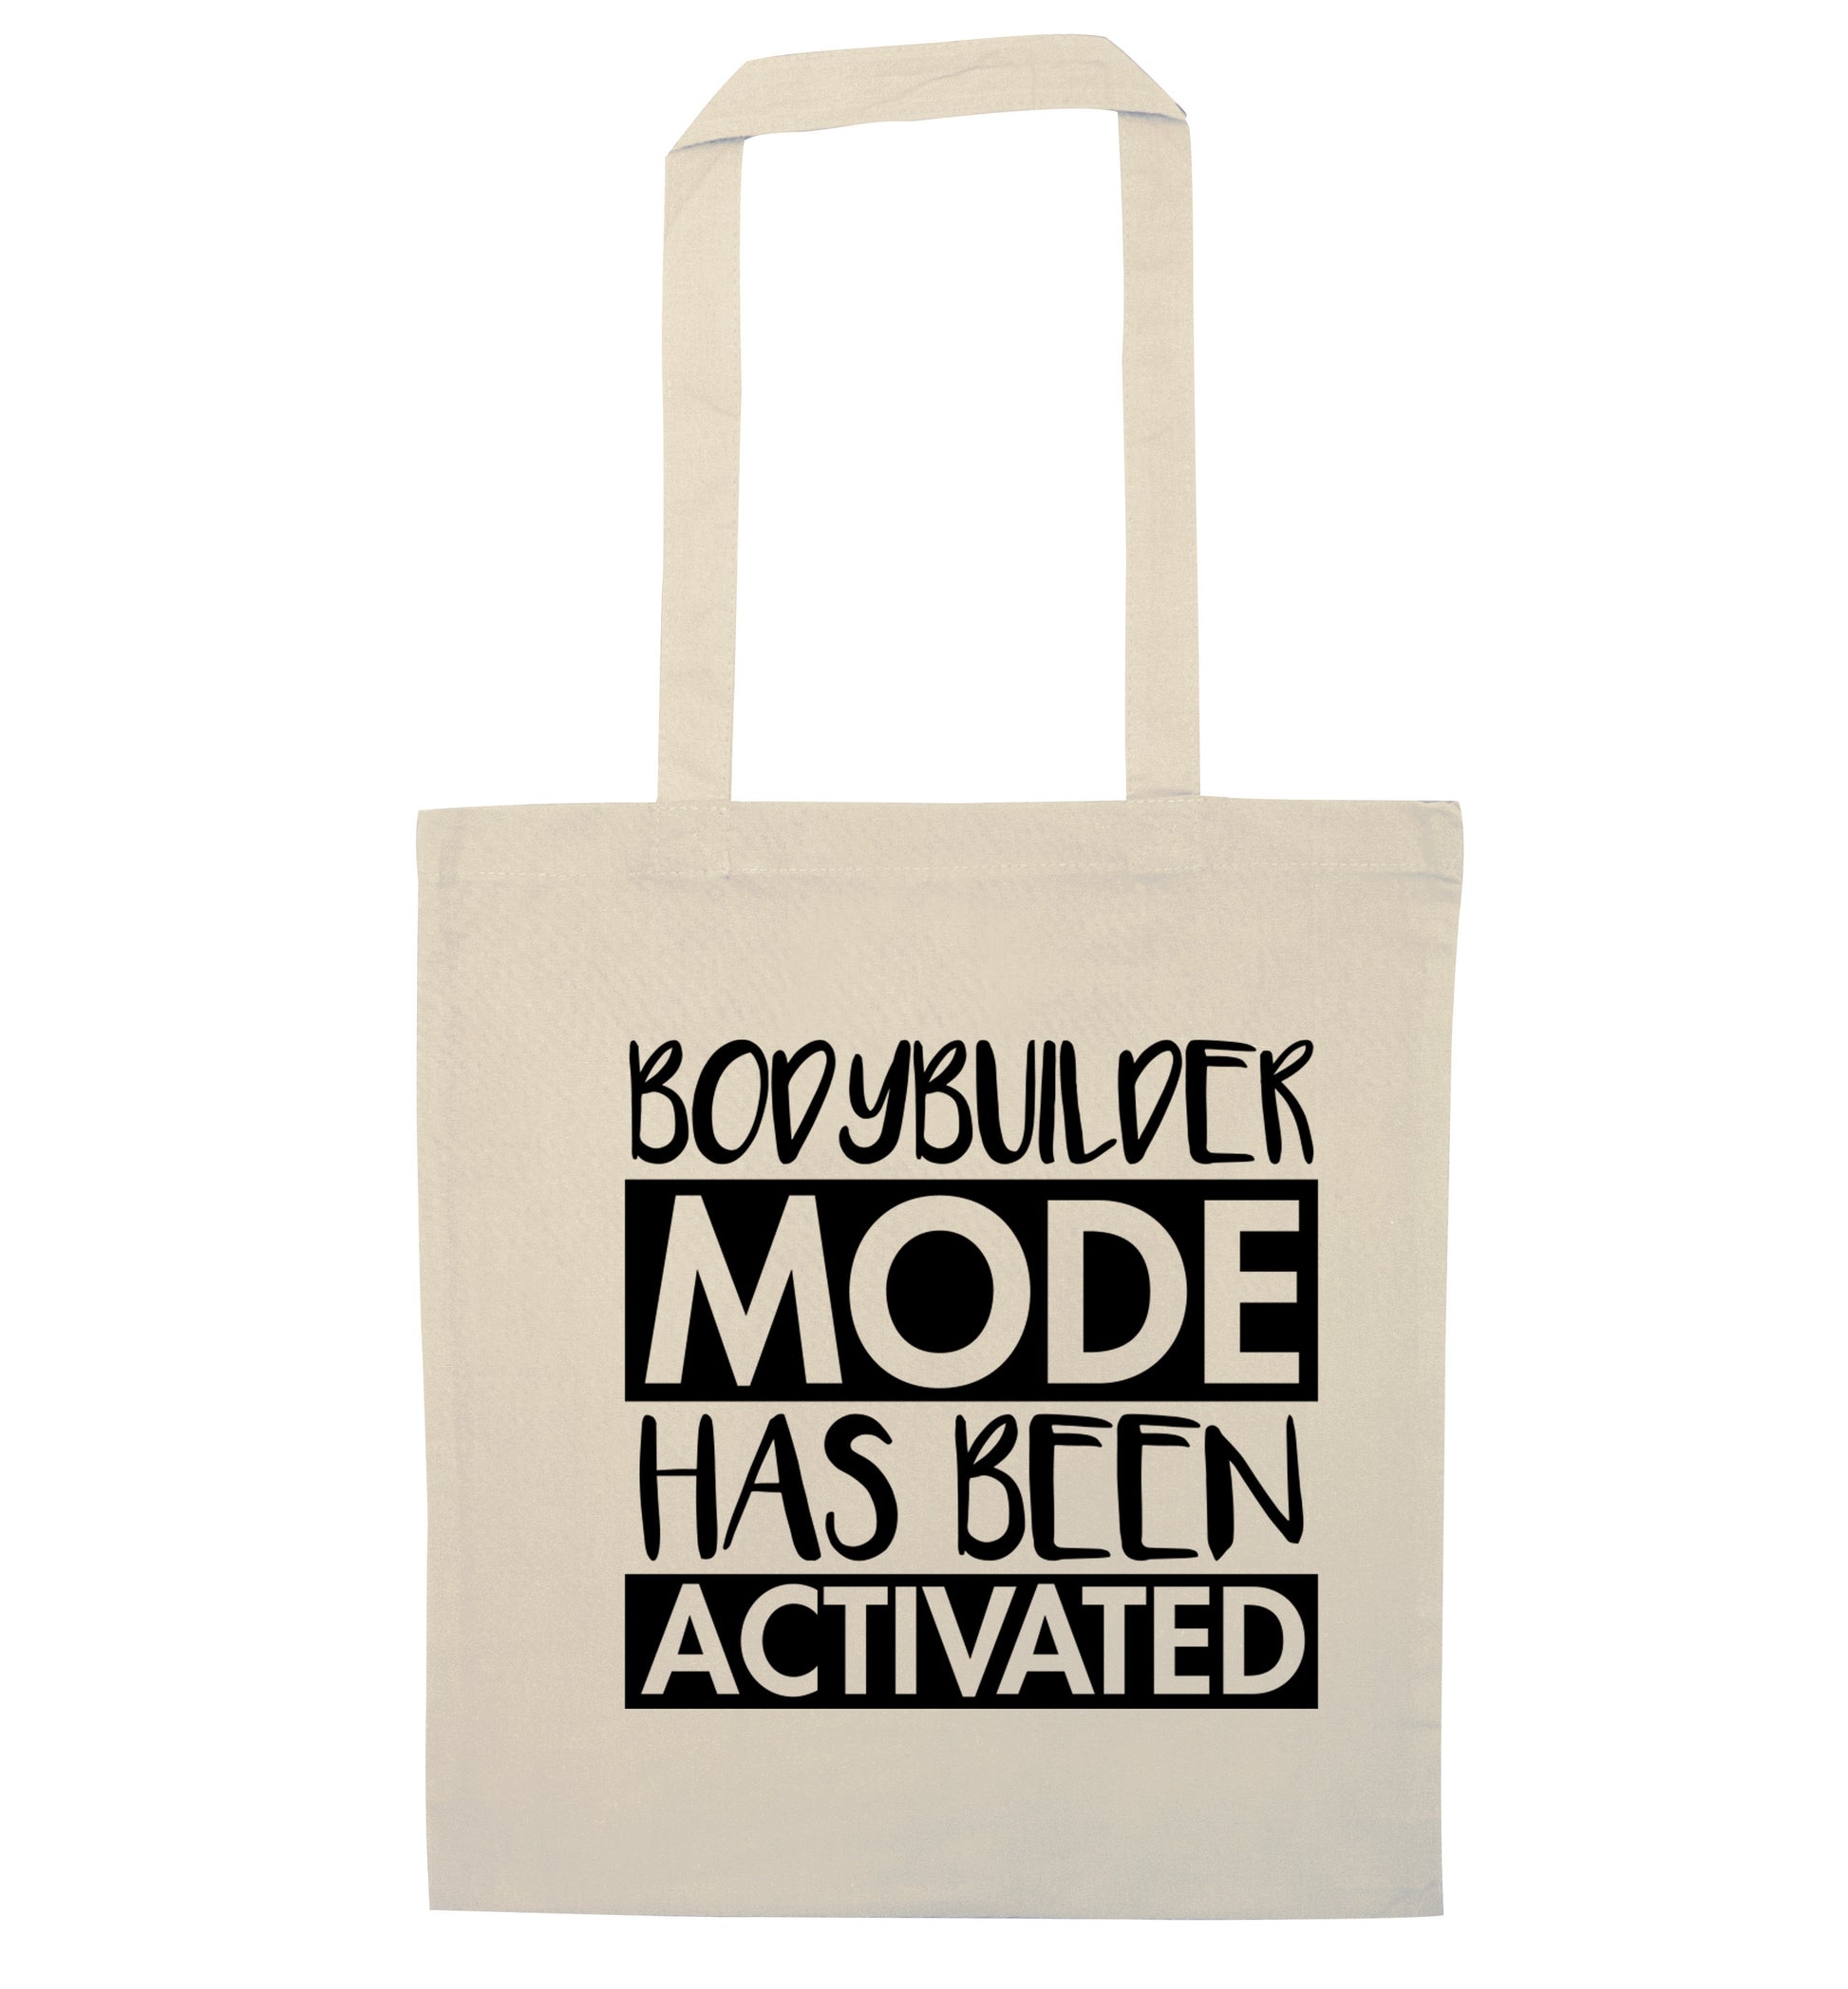 Bodybuilder mode activated natural tote bag